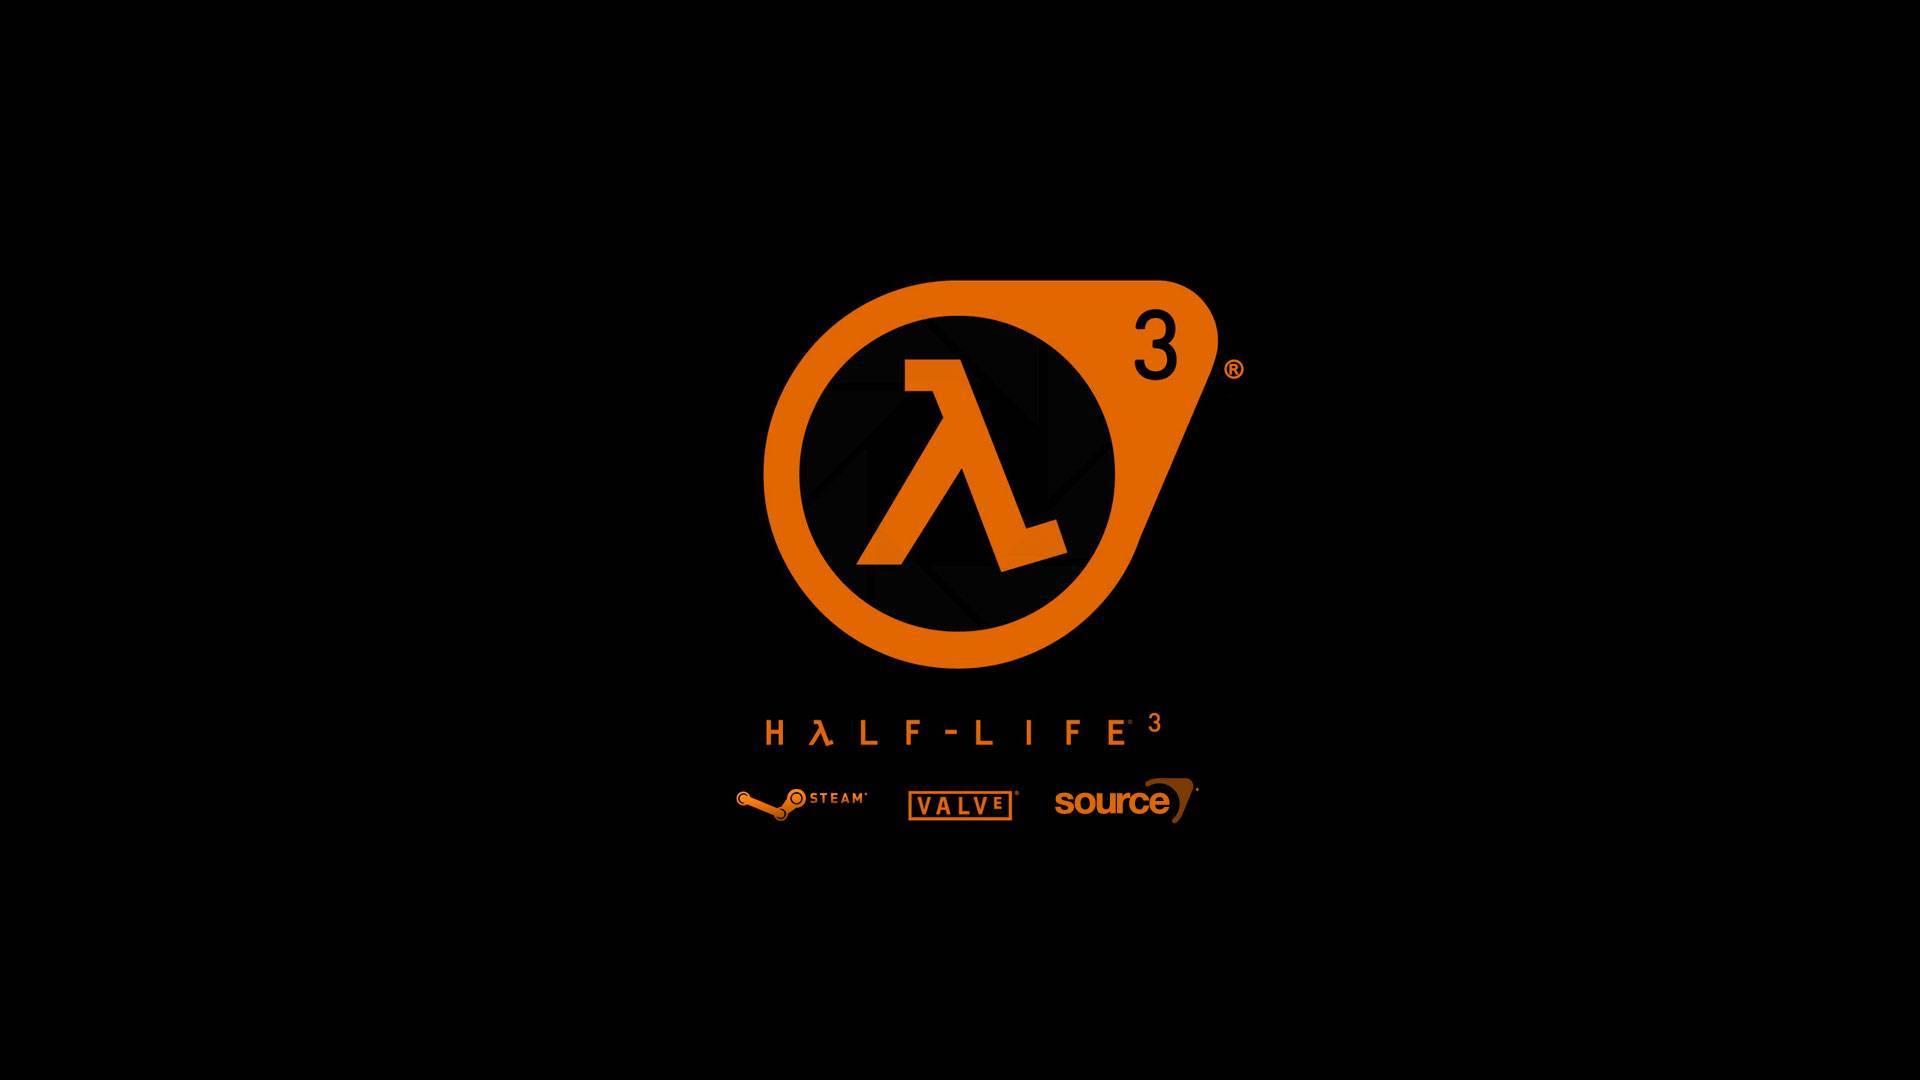 Half Life Wallpaper In 1080p HD Gamingbolt Video Game News